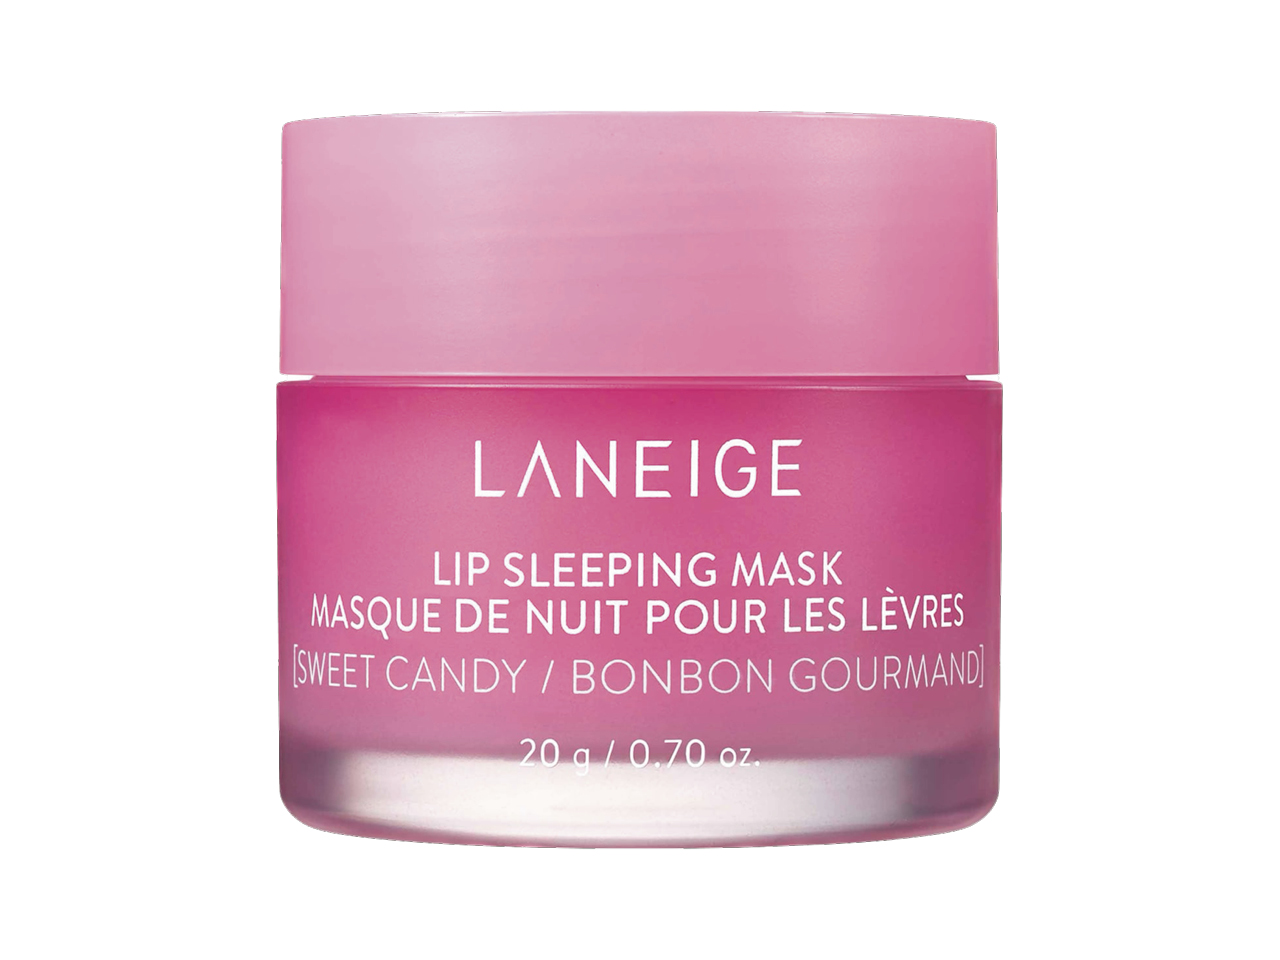 A pink jar of Laneige Lip Sleeping Mask in Sweet Candy lip balm.